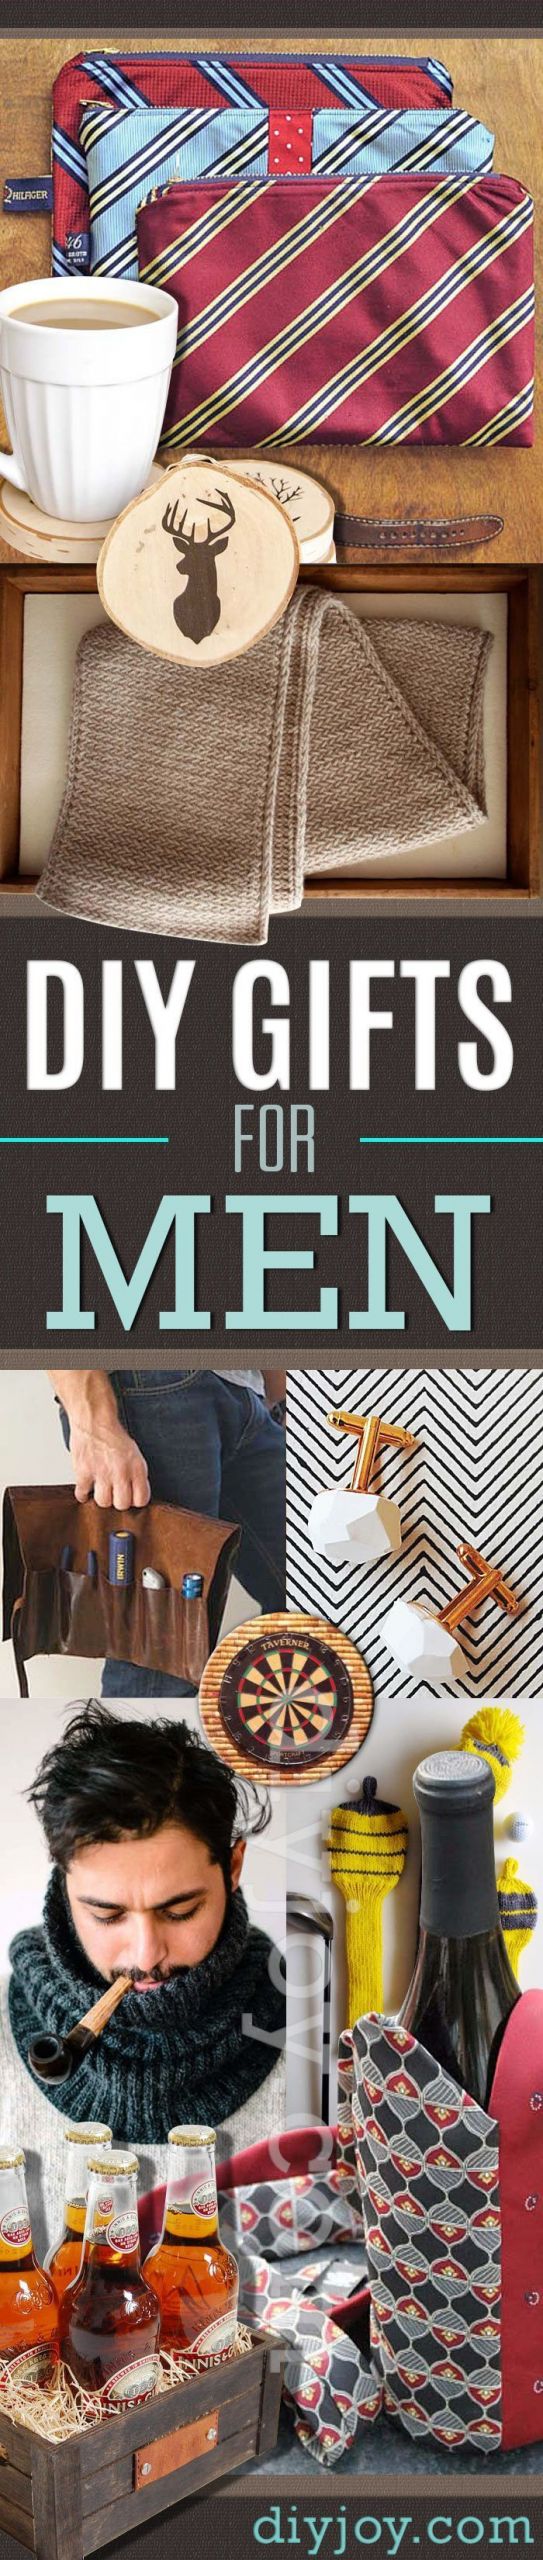 DIY Birthday Gifts For Men
 40 DIY Gifts for Men